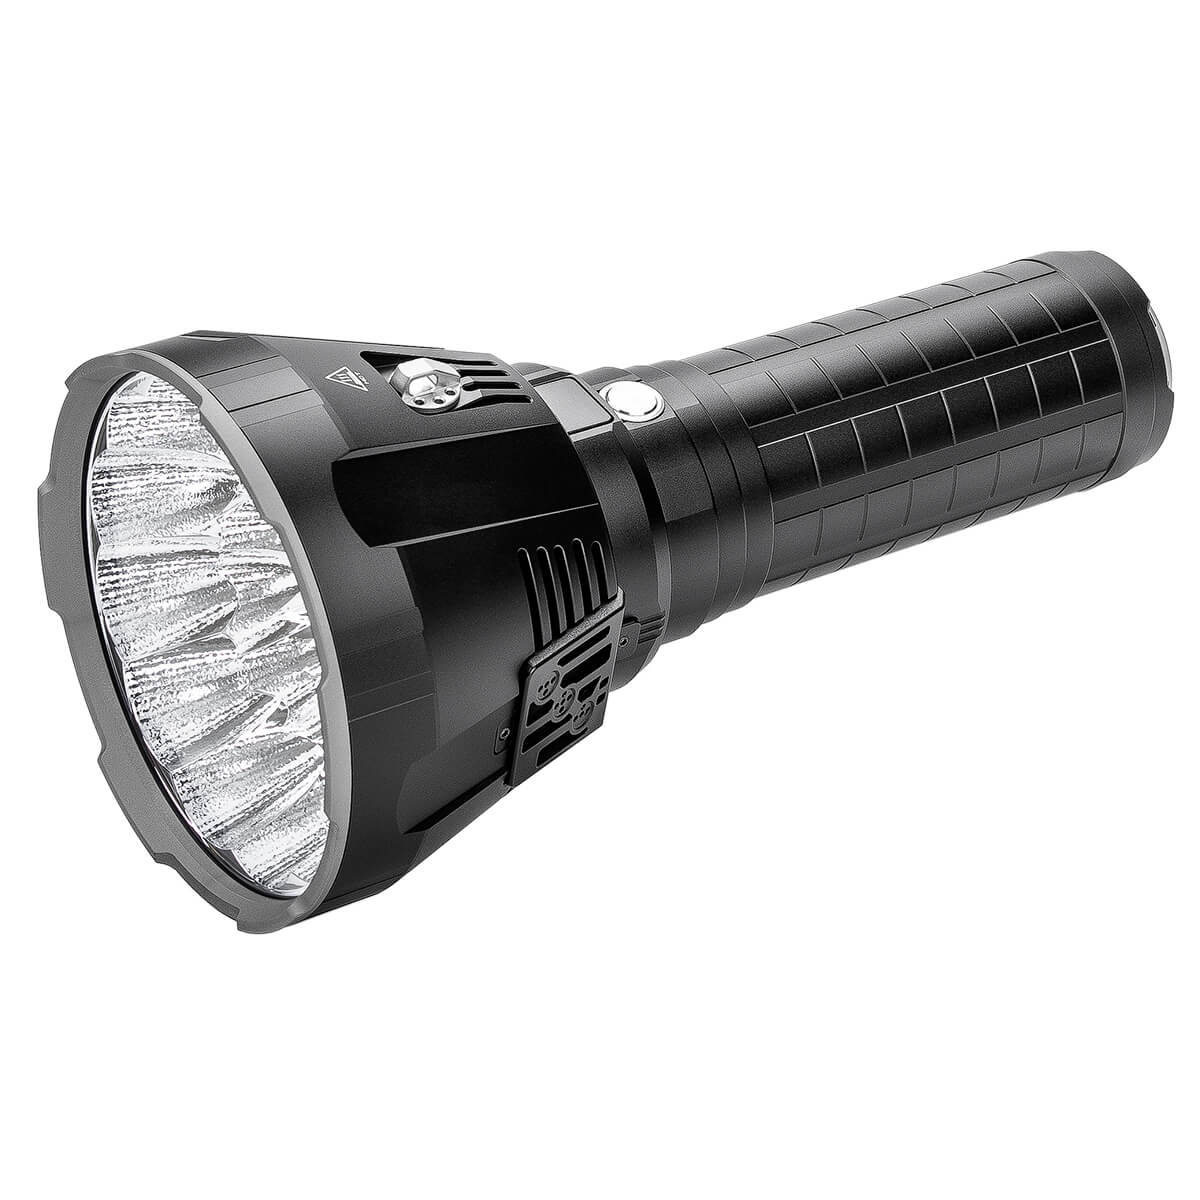 IMALENT MS18 most powerful flashlight 100000 lumens